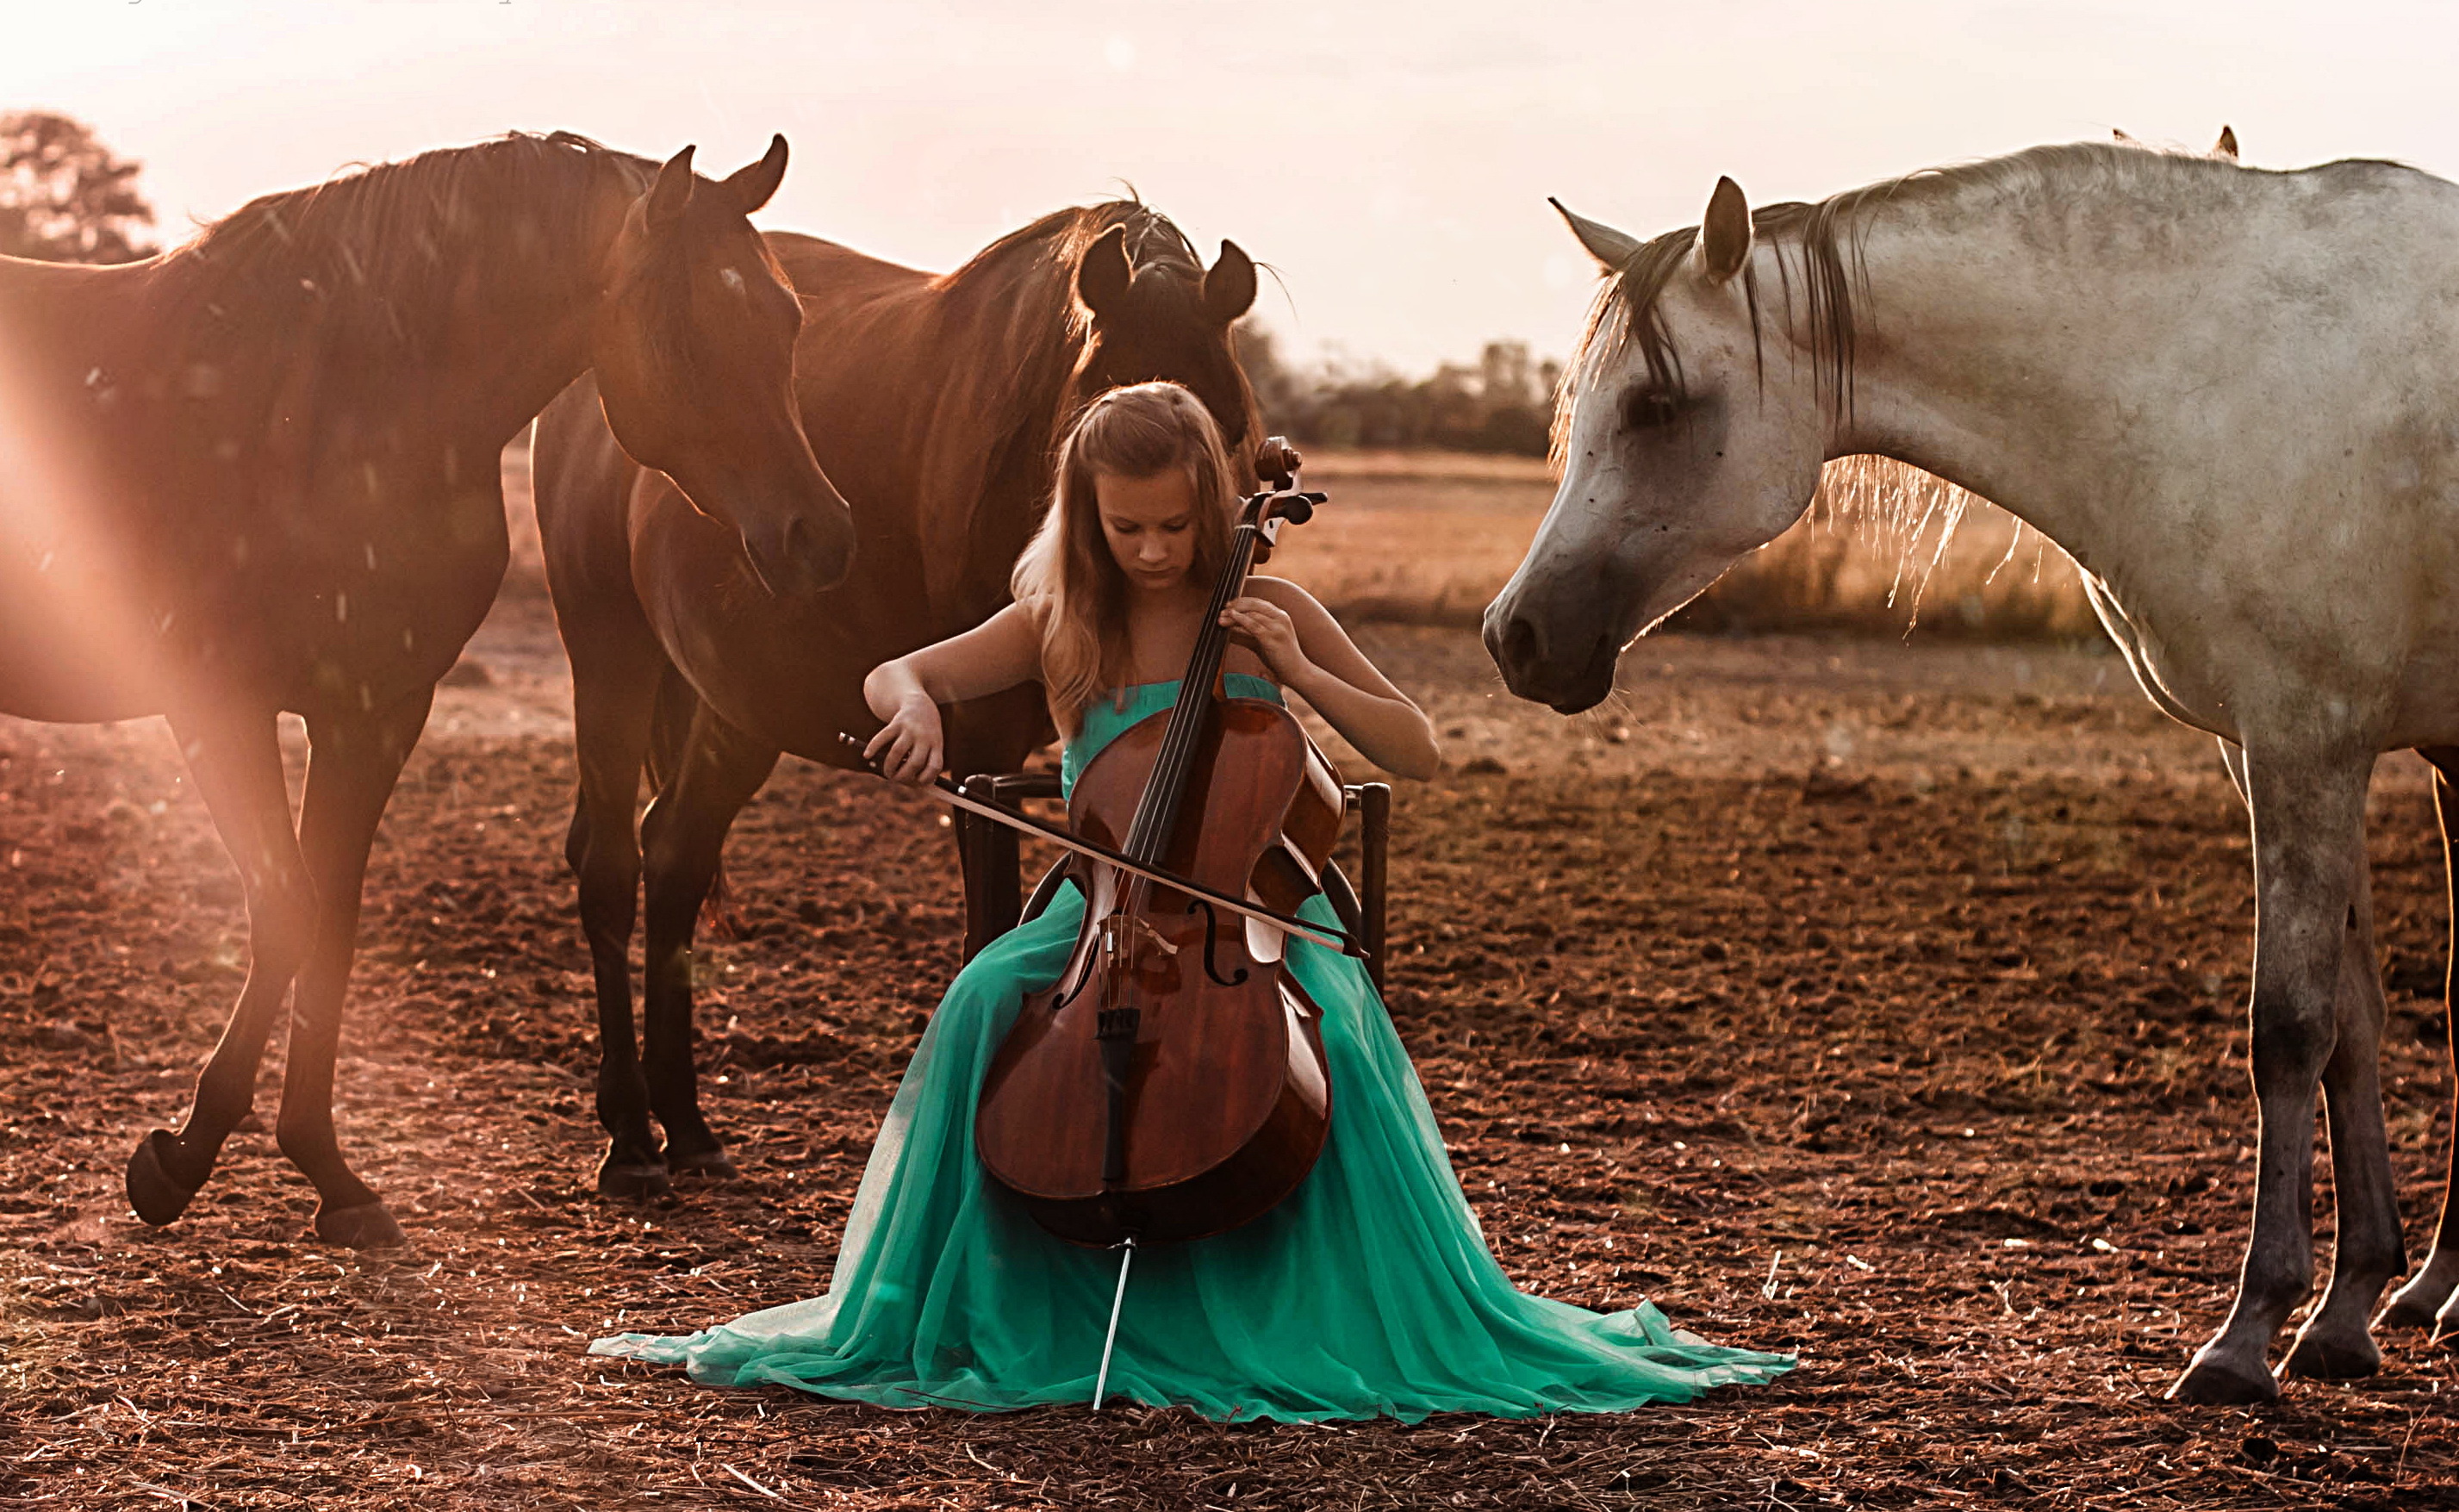 Музыка horses. Девушка с лошадью. Девушка на коне. Девочка на лошади. Красивая девушка на коне.